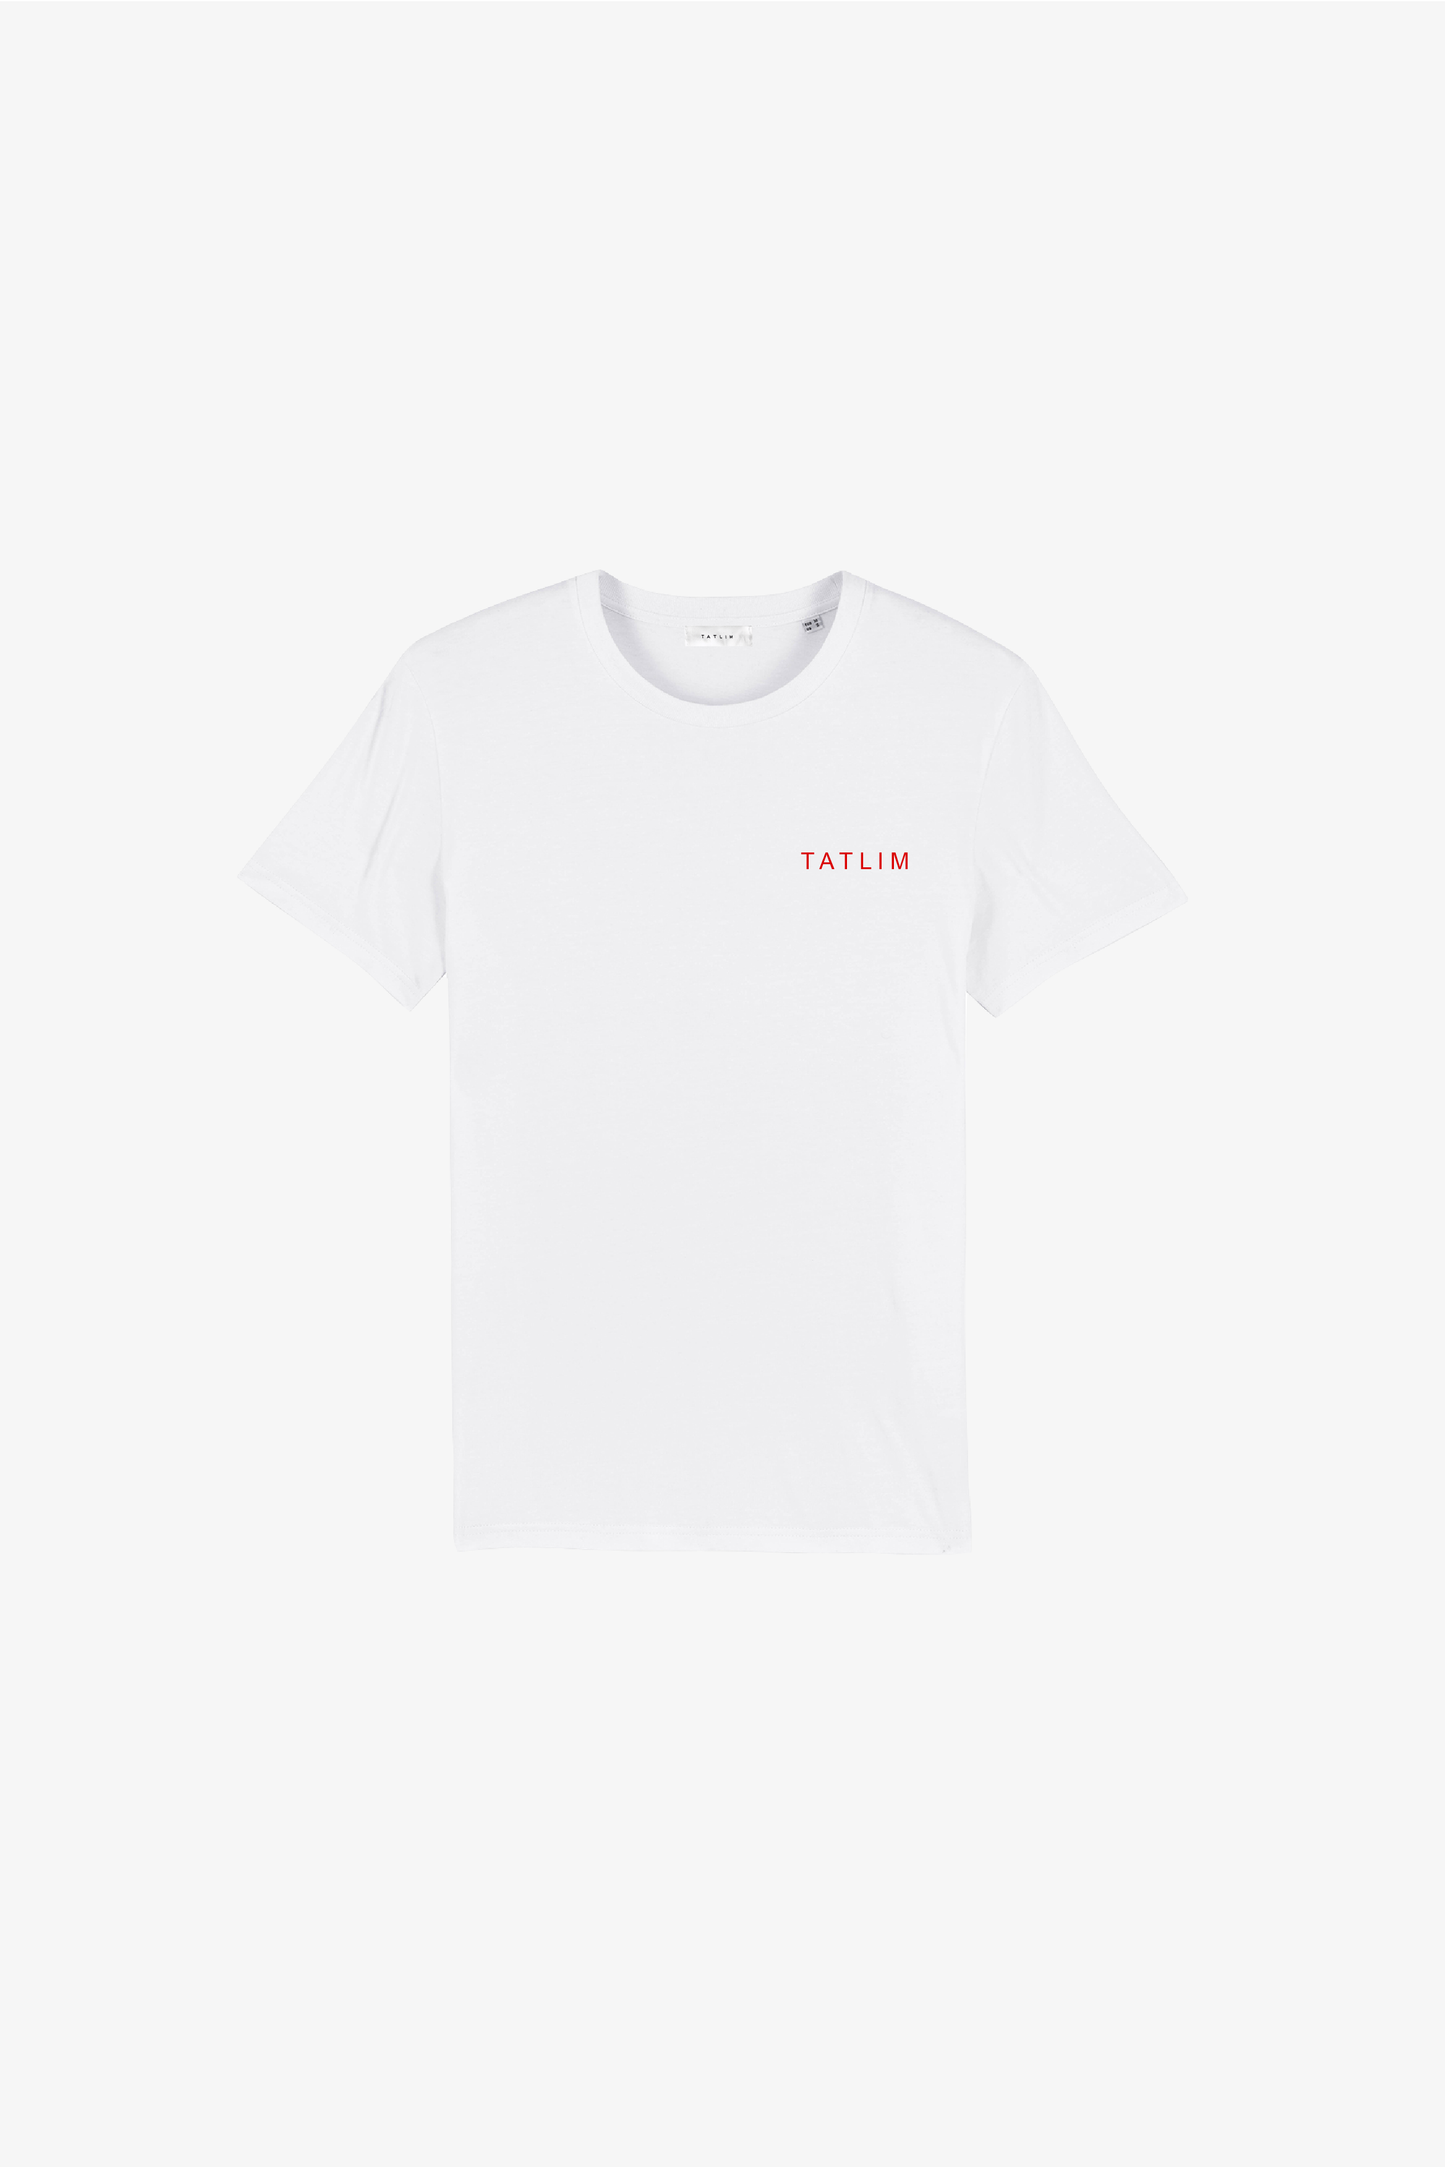 White Tatlim Essentials II T Shirt